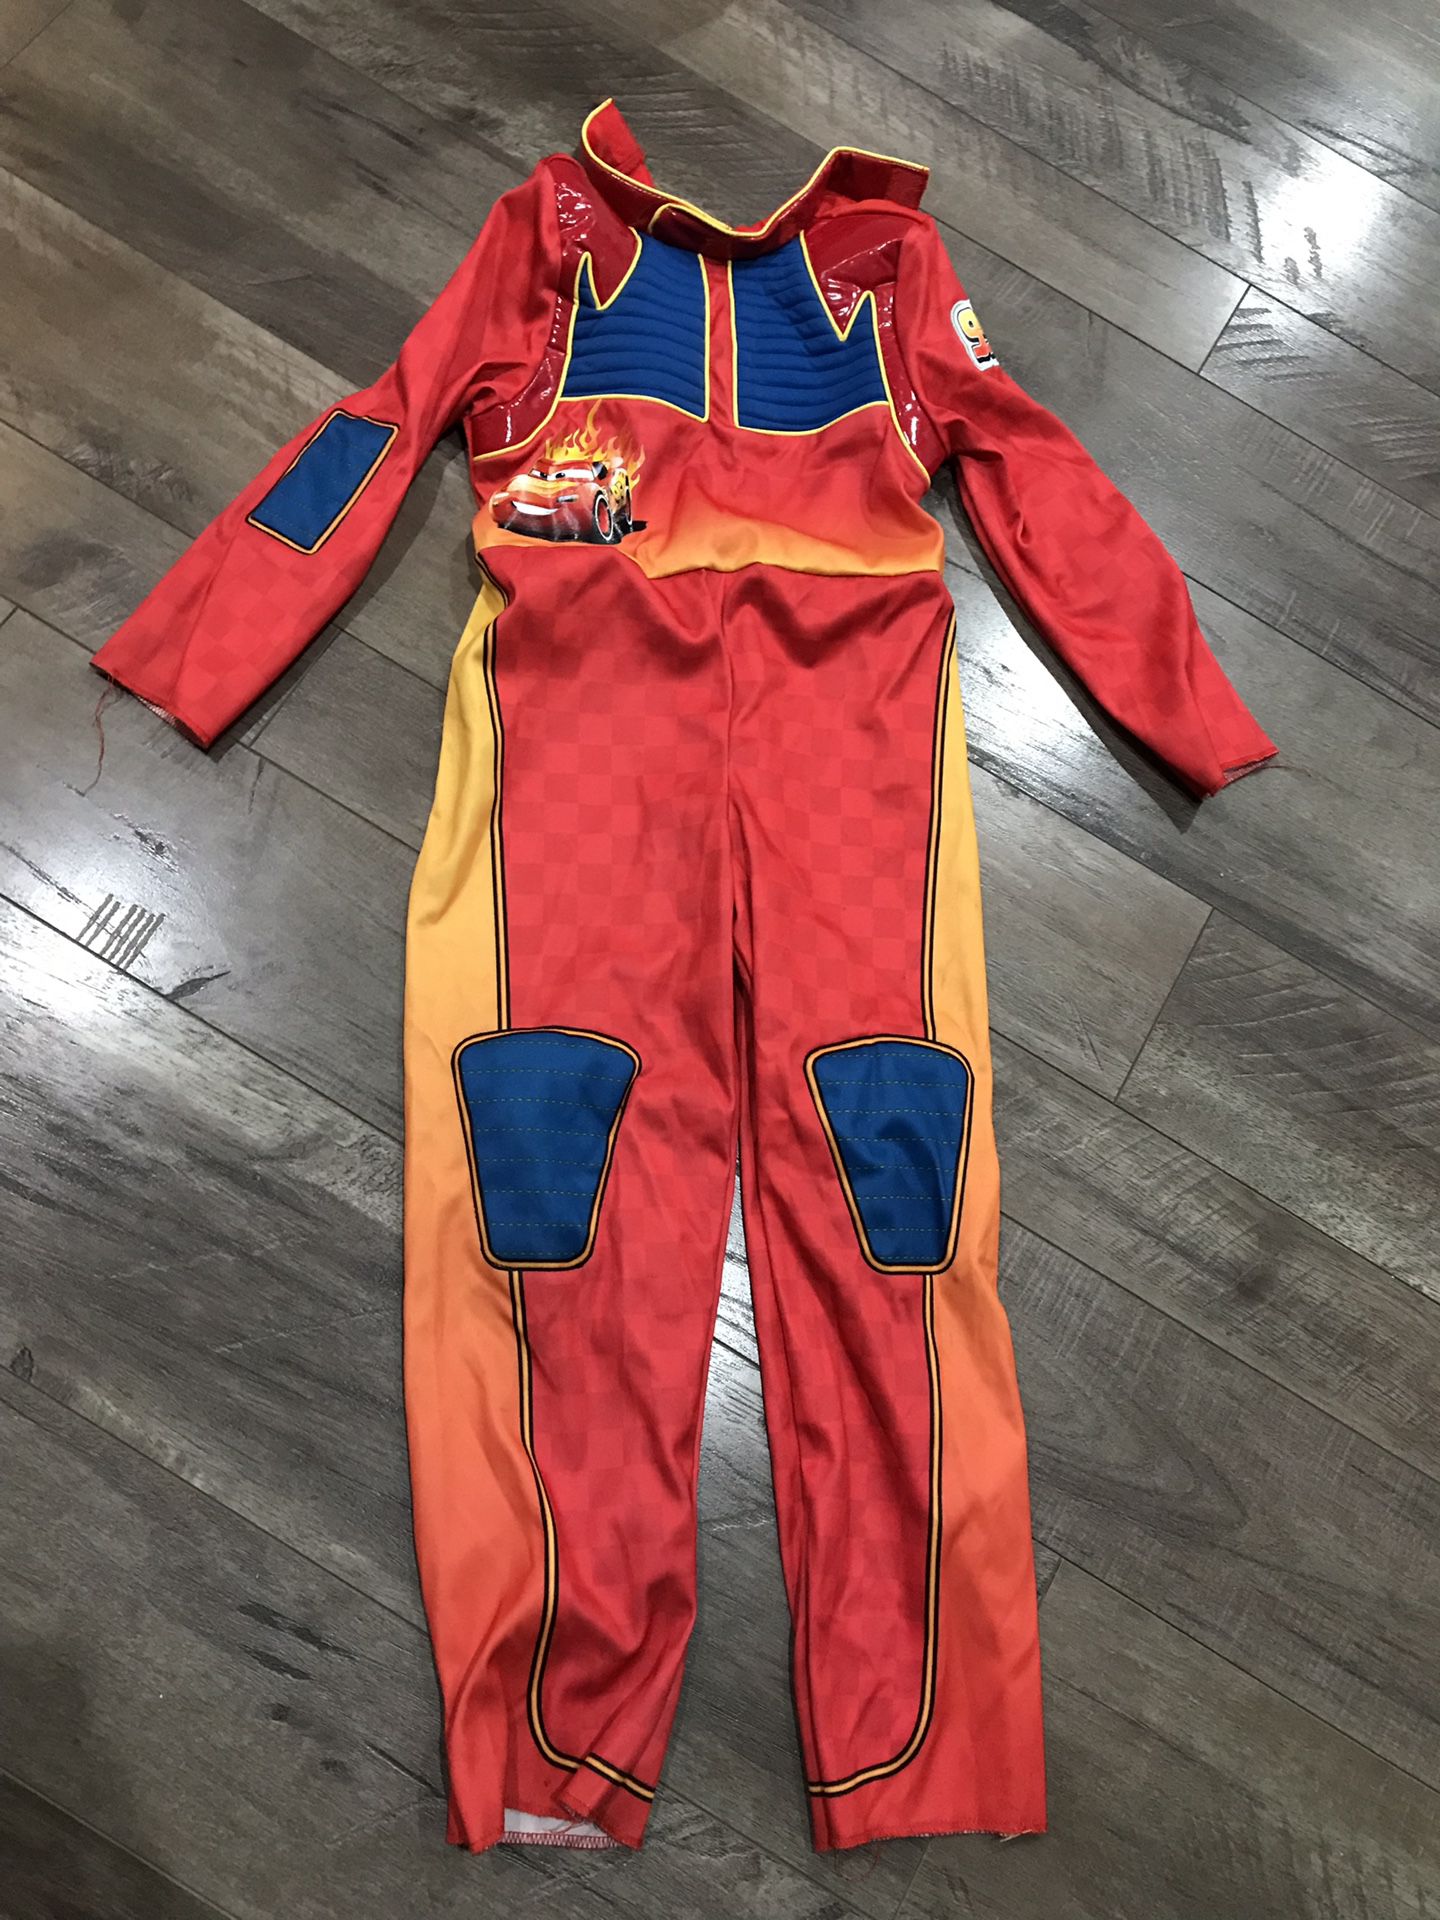 Lightning McQueen costume size 4/5